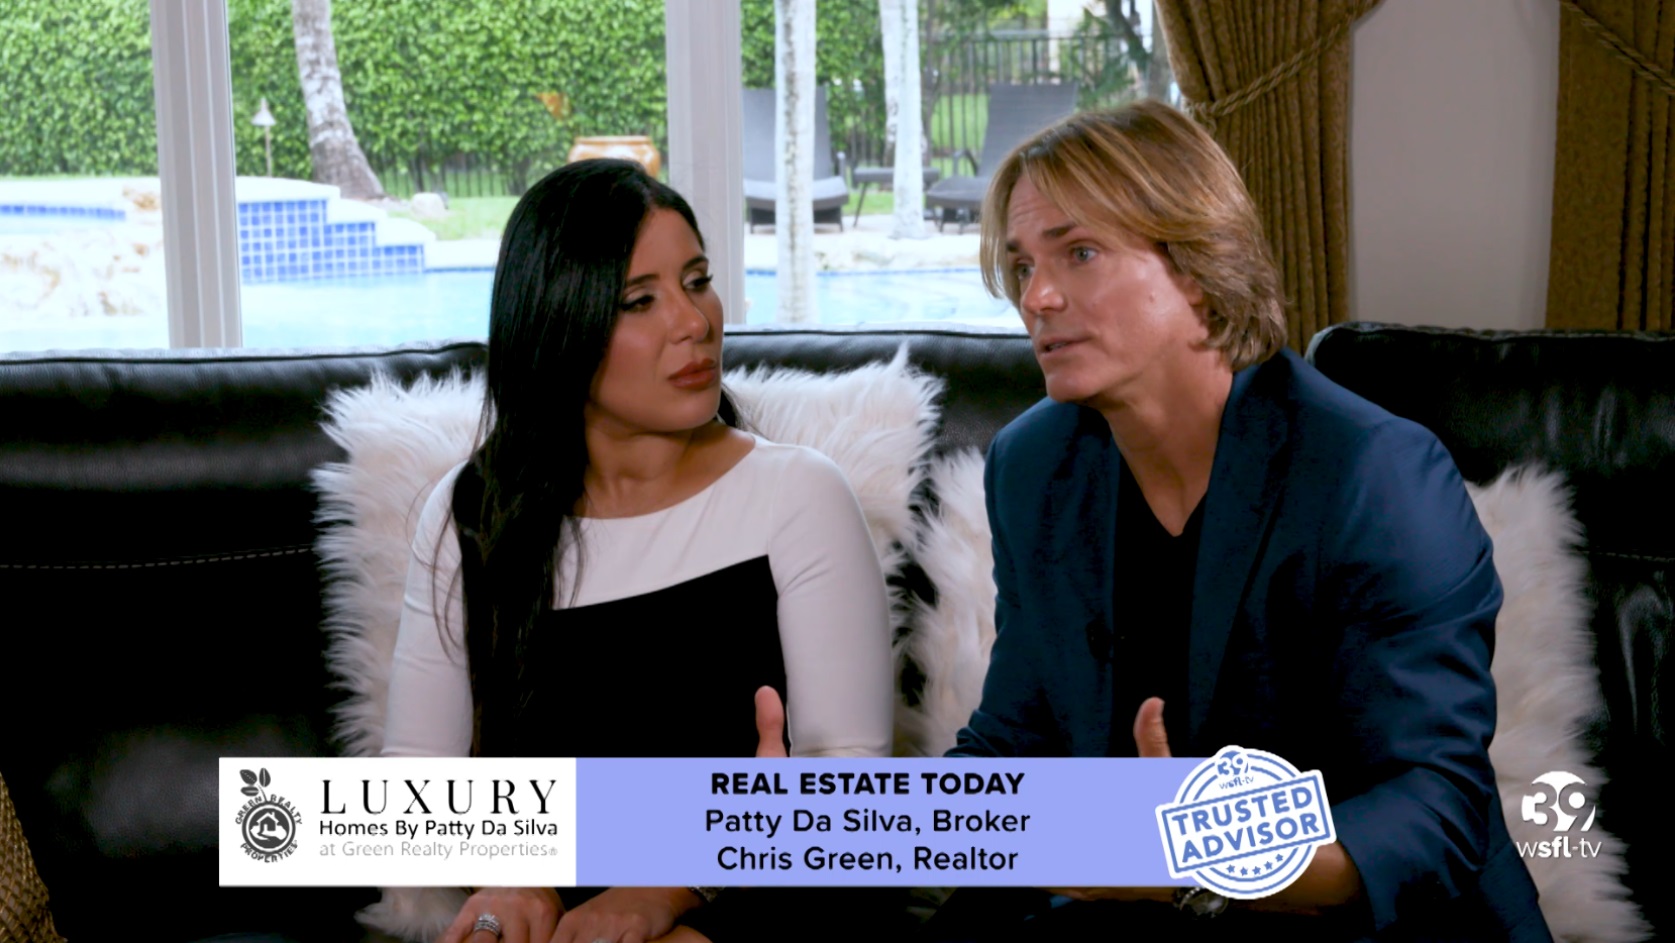 Luxury Broker Patty Da Silva with Realtor Chris Green at Green Realty Properties